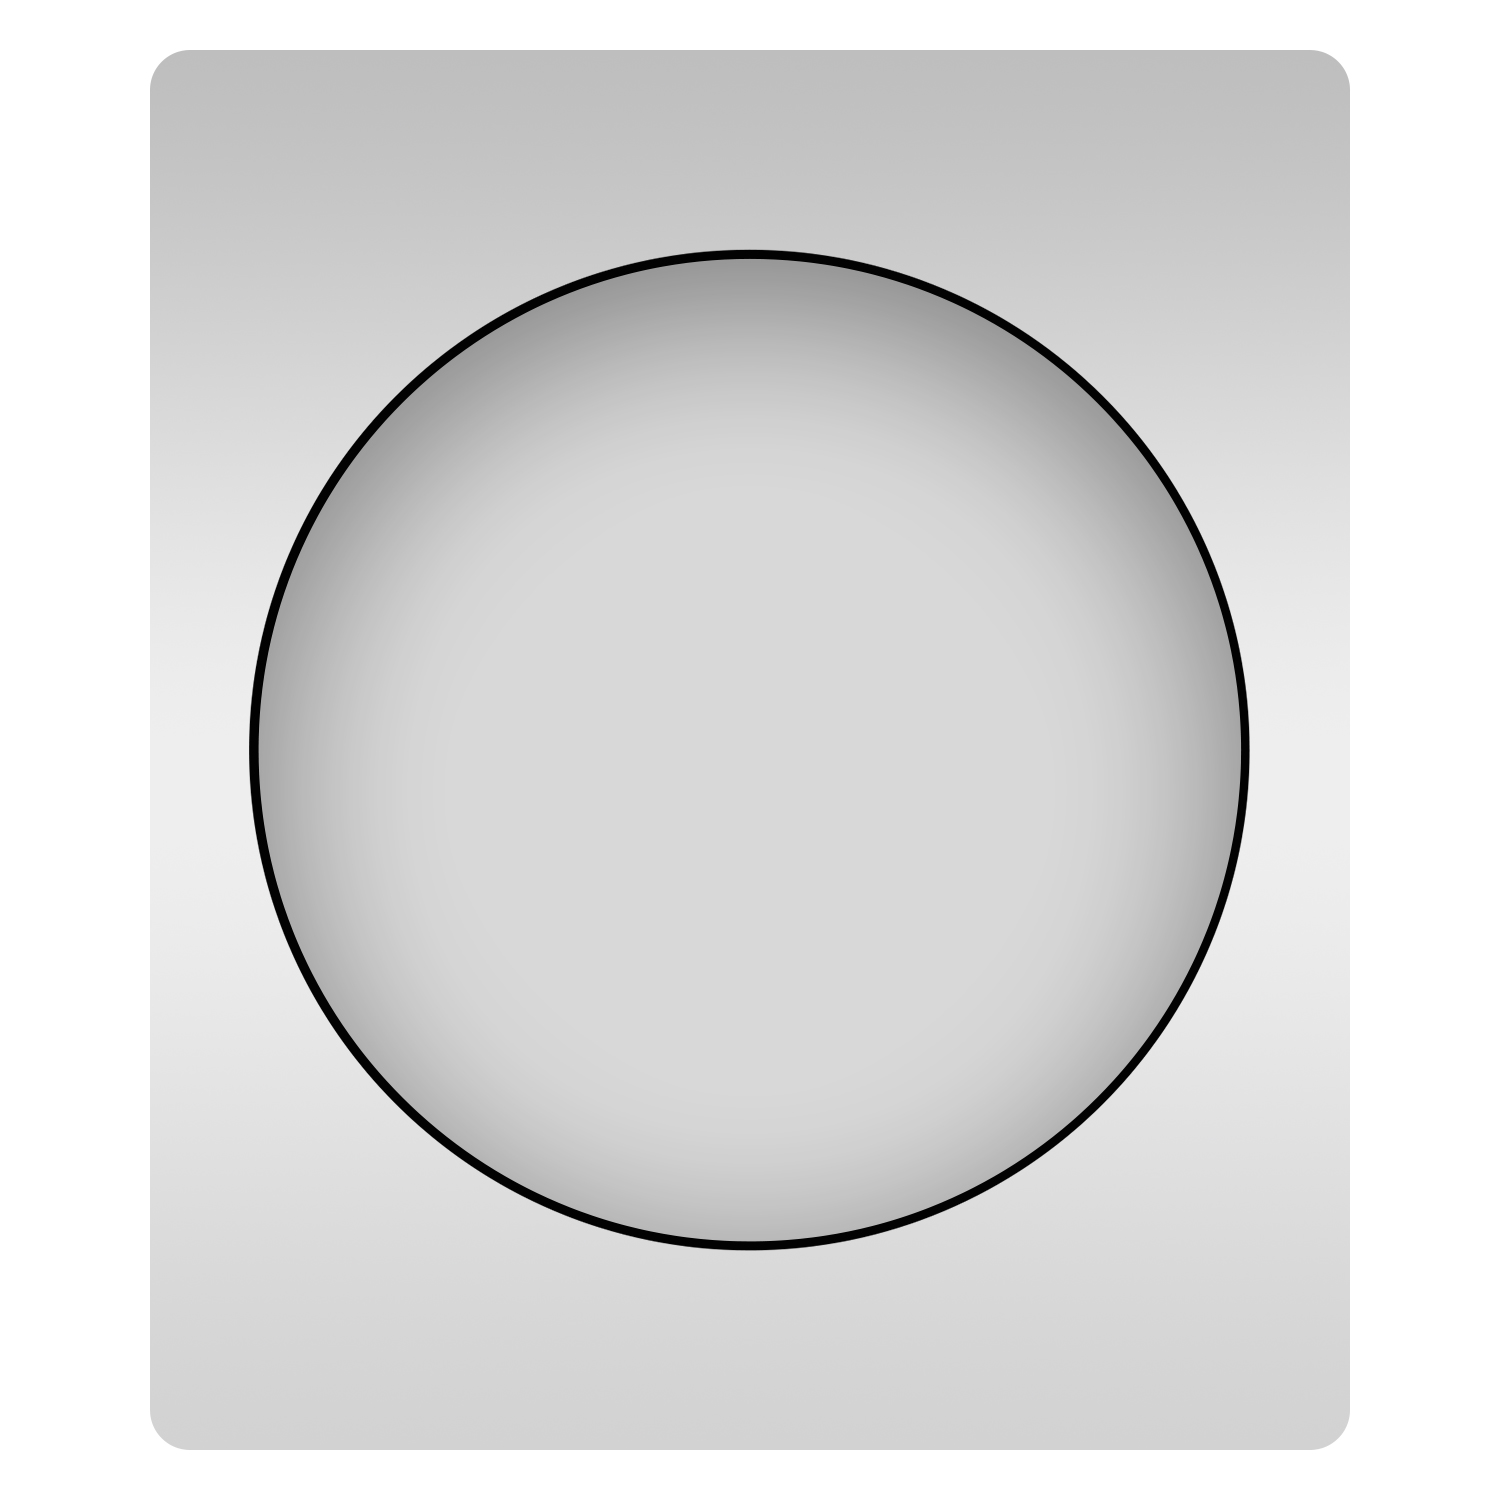 Влагостойкое круглое зеркало Wellsee 7 Rays' Spectrum 172200090, 100 см